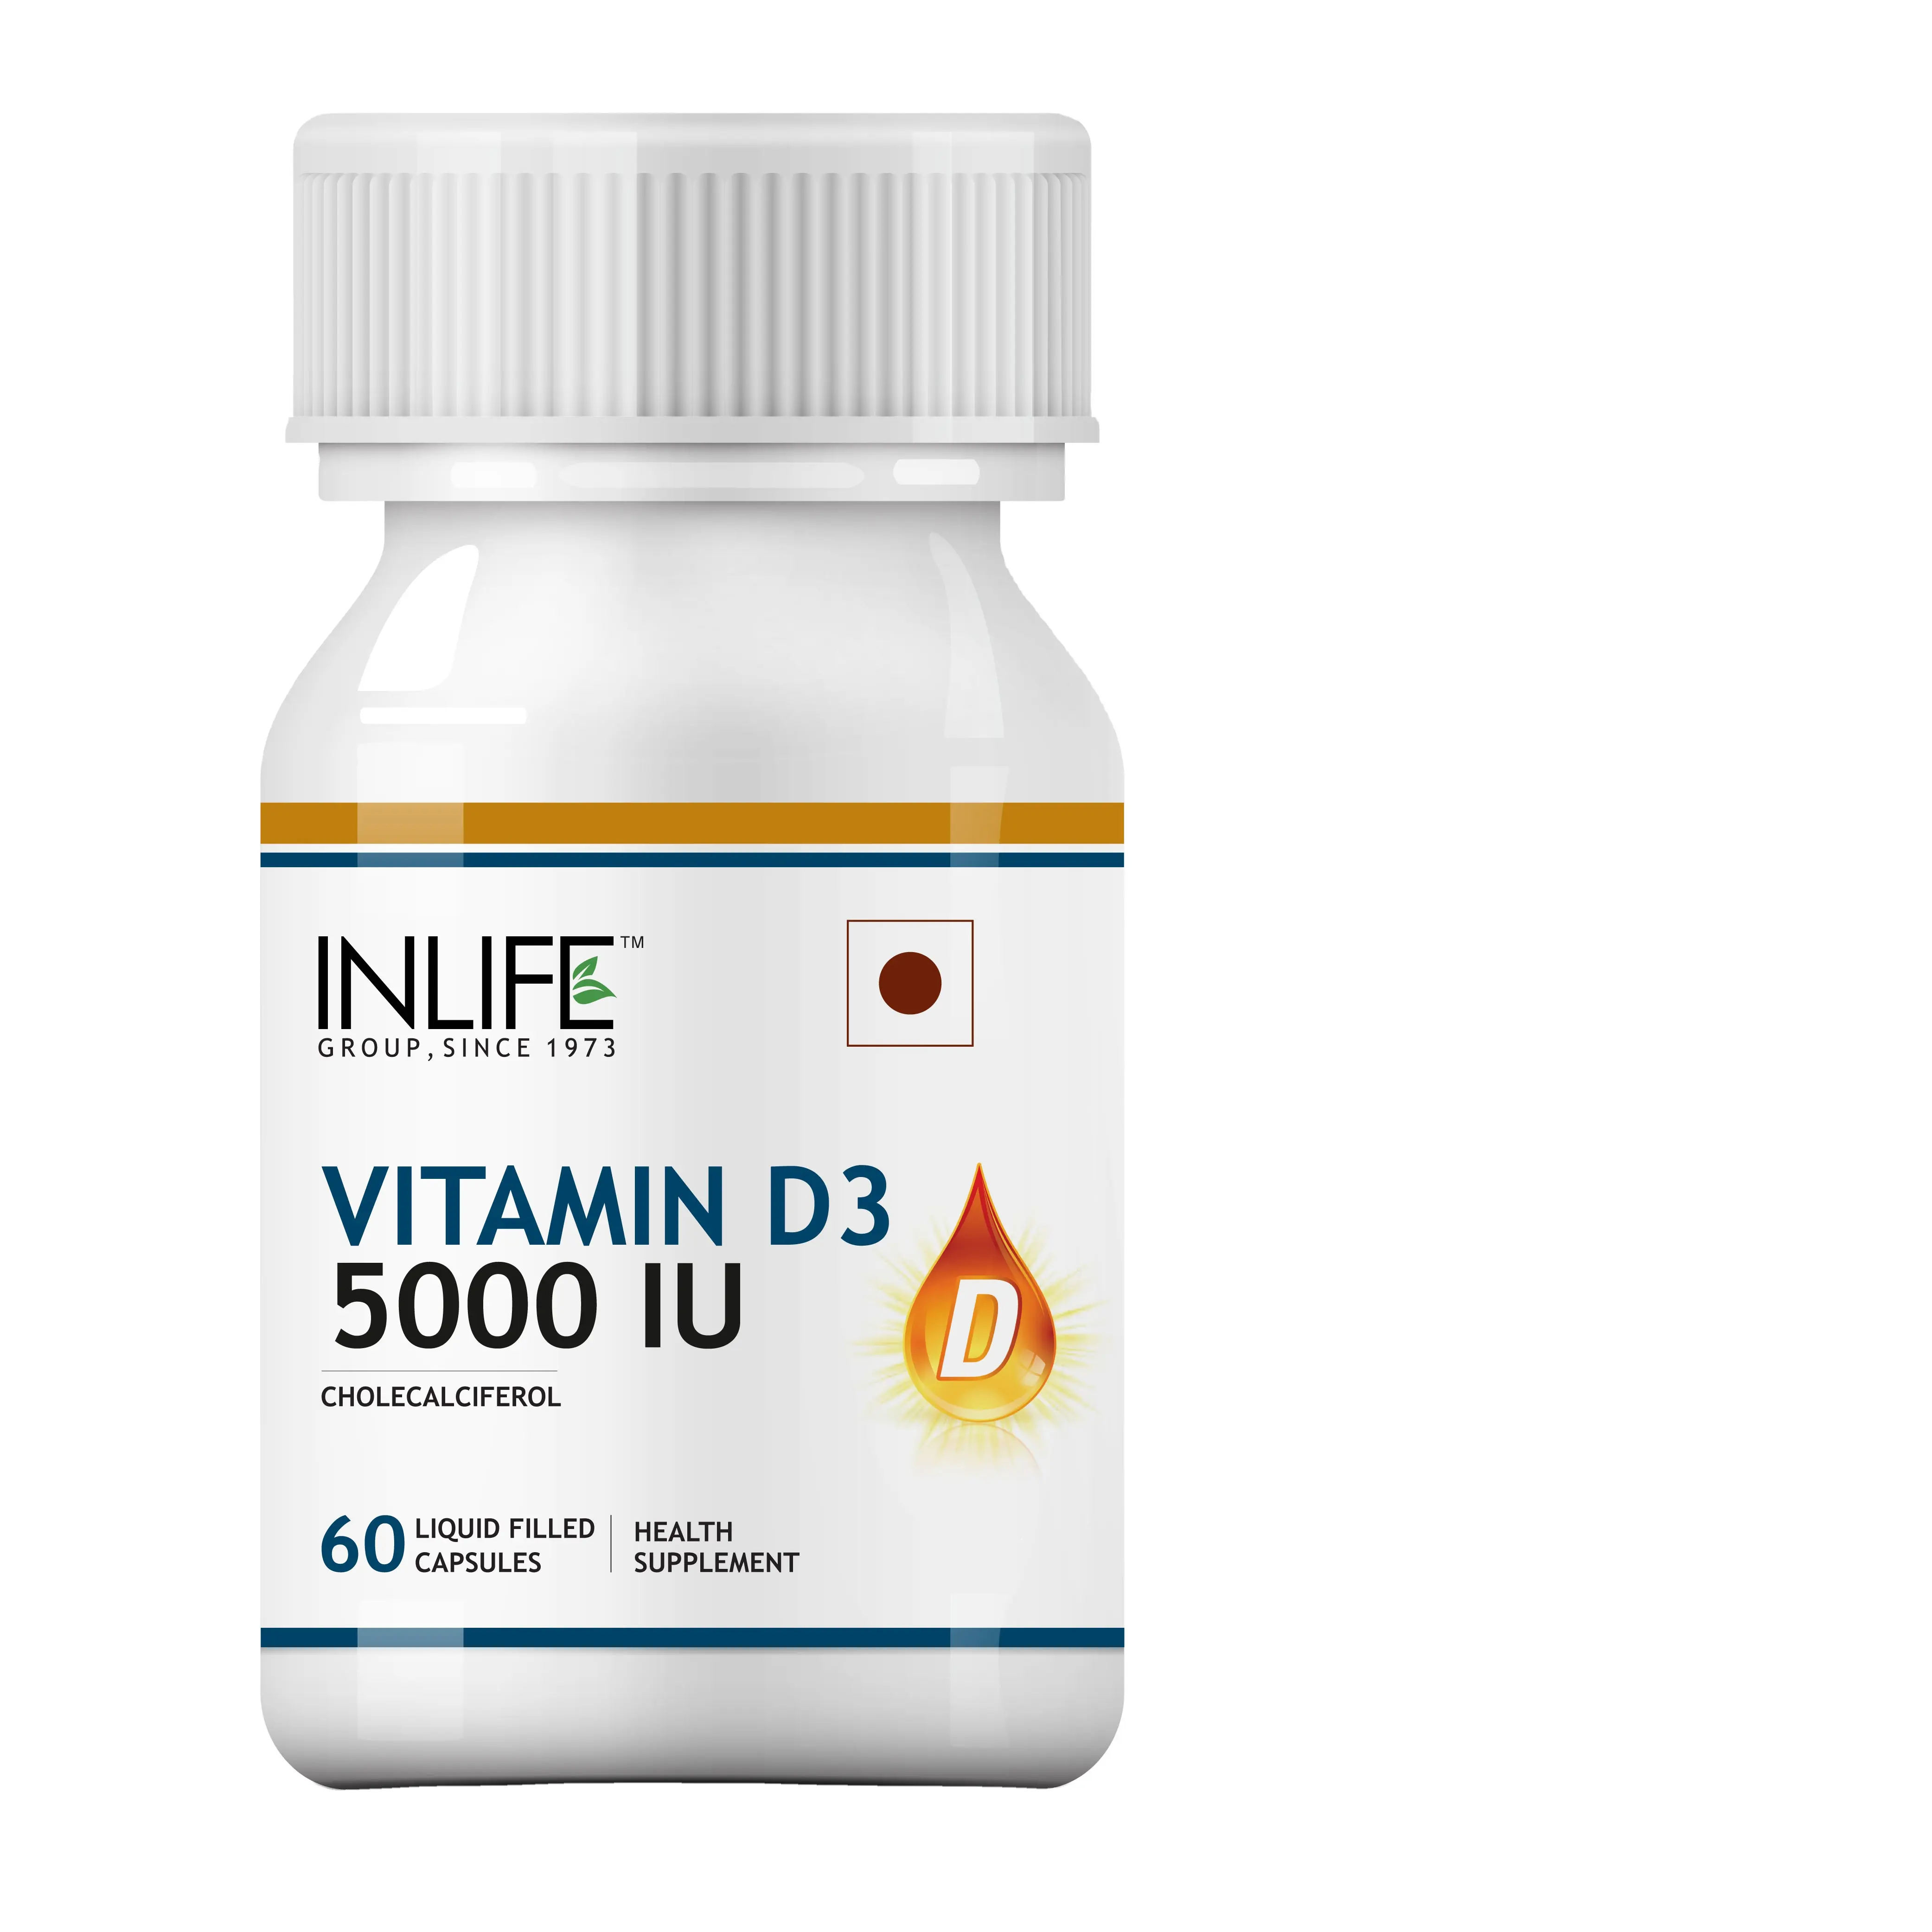 INLIFE วิตามิน D3 Supplement อาหารเสริม5000 IU-60ของเหลวที่เต็มไปด้วยแคปซูลเจลาตินแบบแข็งสองชิ้น